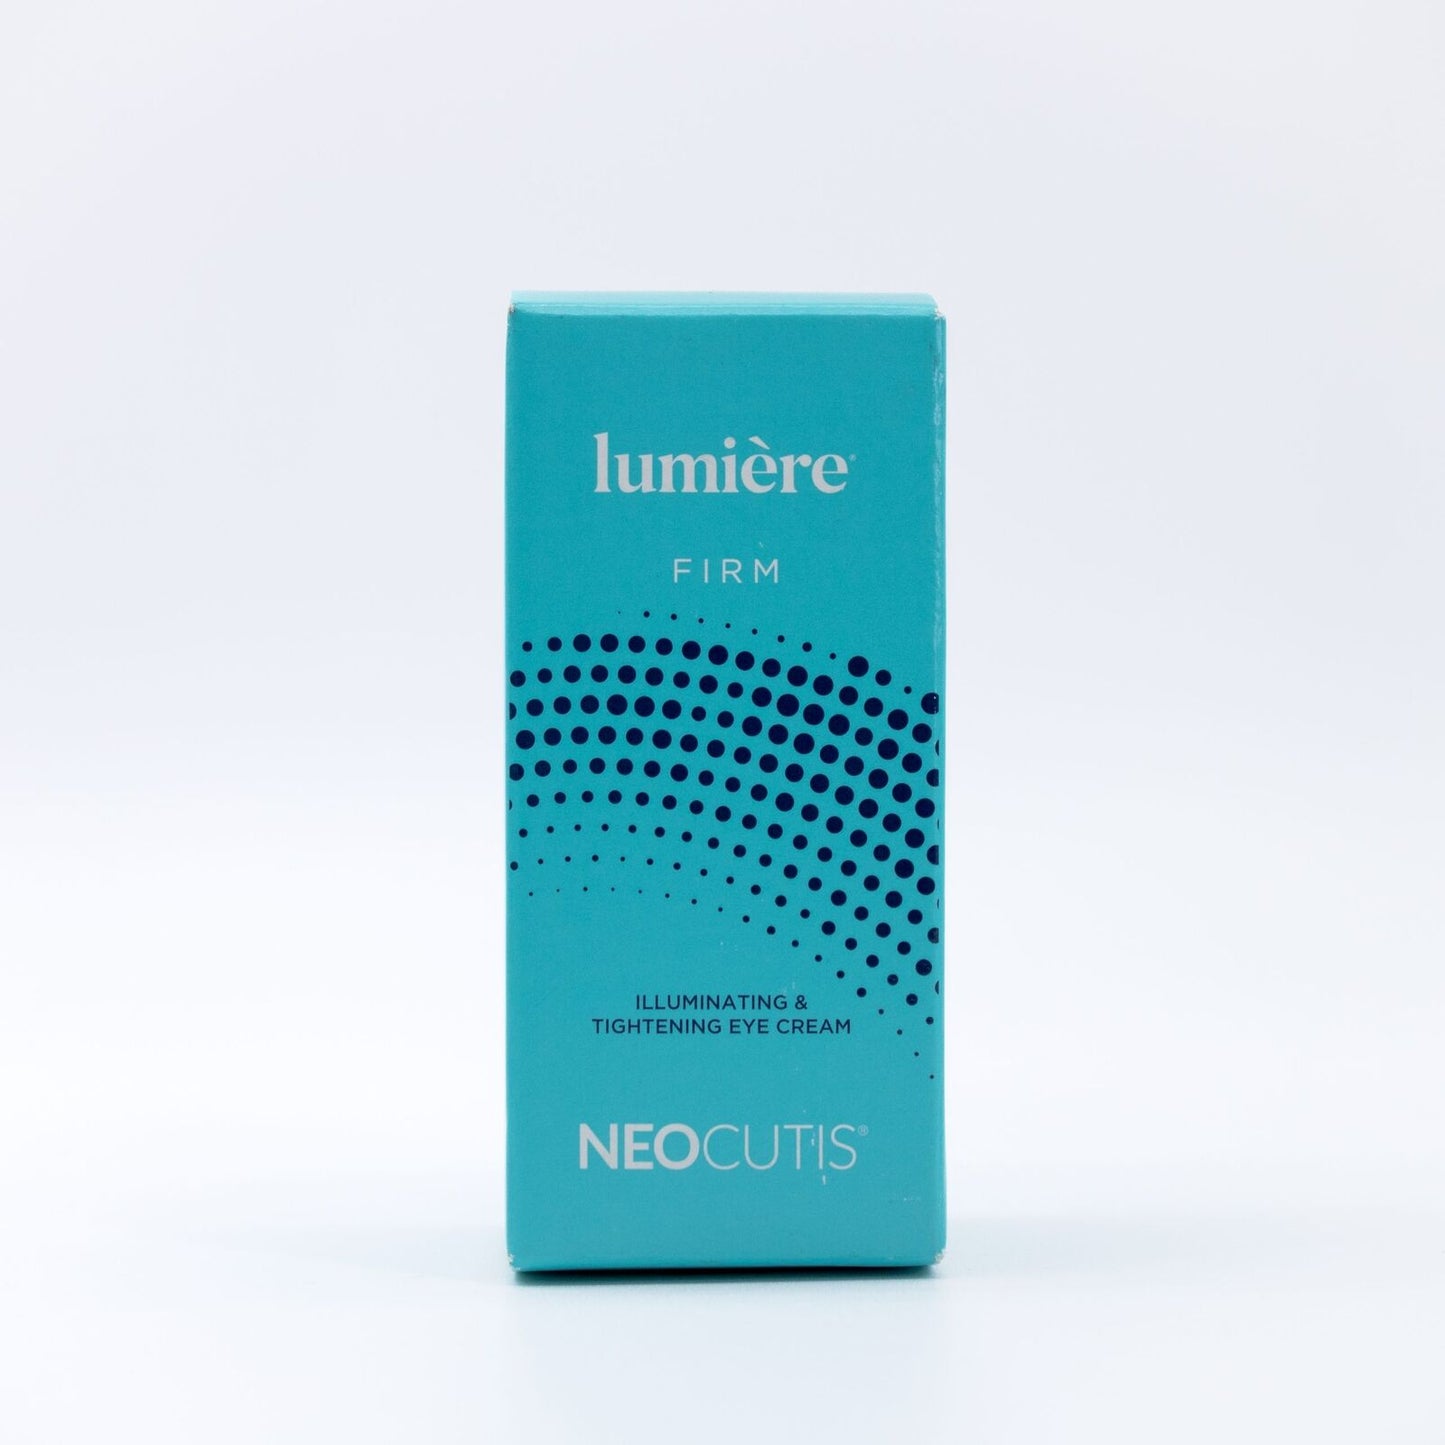 NEO CUTIS Lumiere Firm Illuminating & Tightening Eye Cream 0.5oz - Imperfect Box